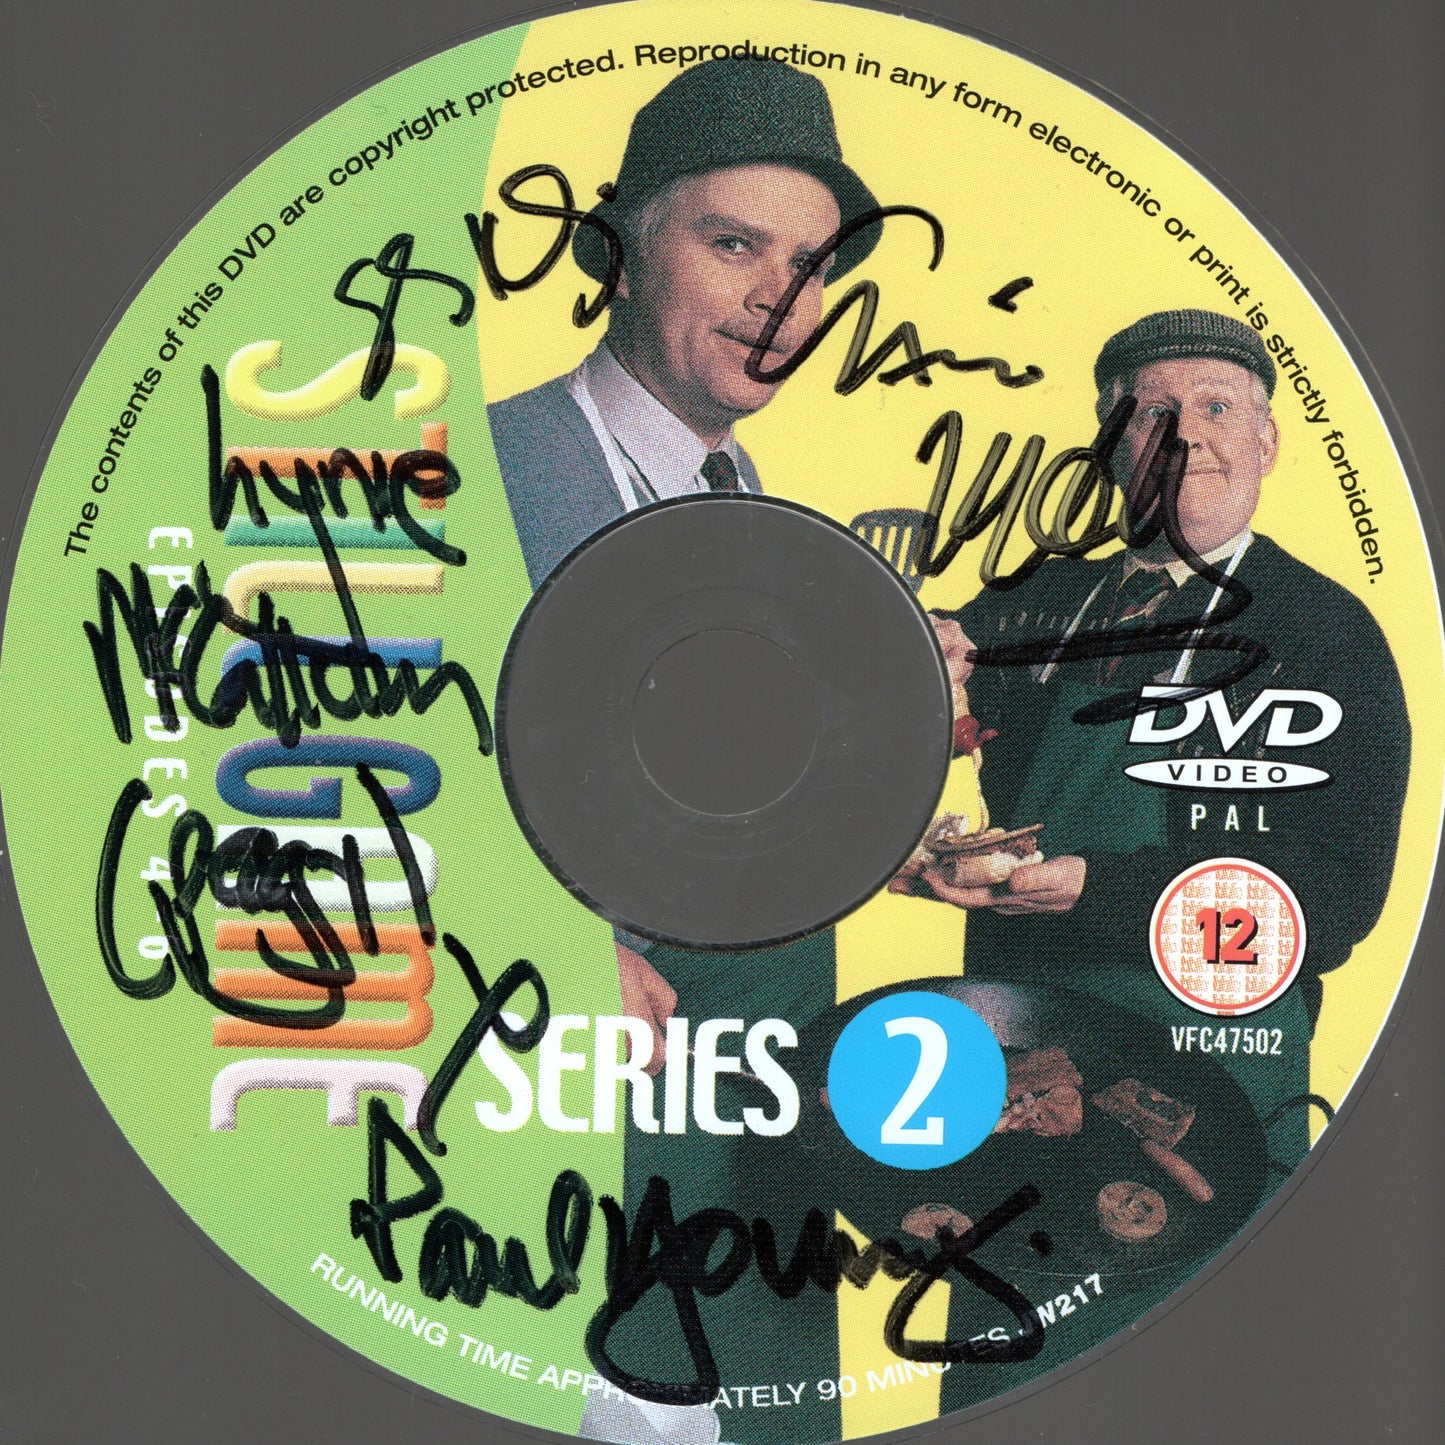 Gavin Mitchell, Sanjeev Kohli, Paul Young & Lynne McCallum - DVD (Multi Signed) (Other TV)